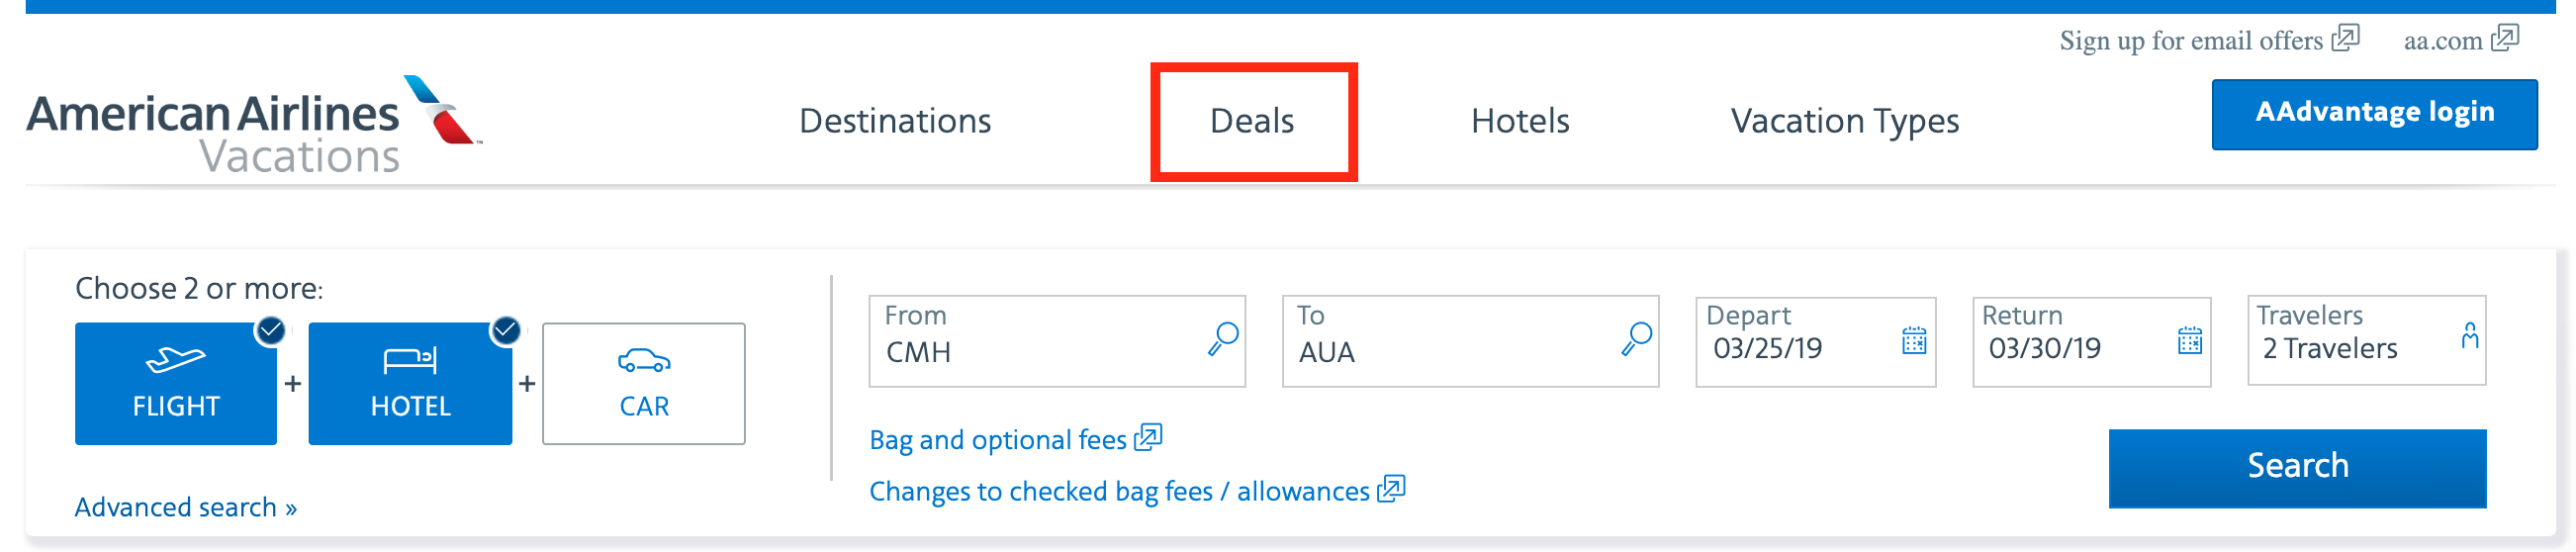 aa travel deals